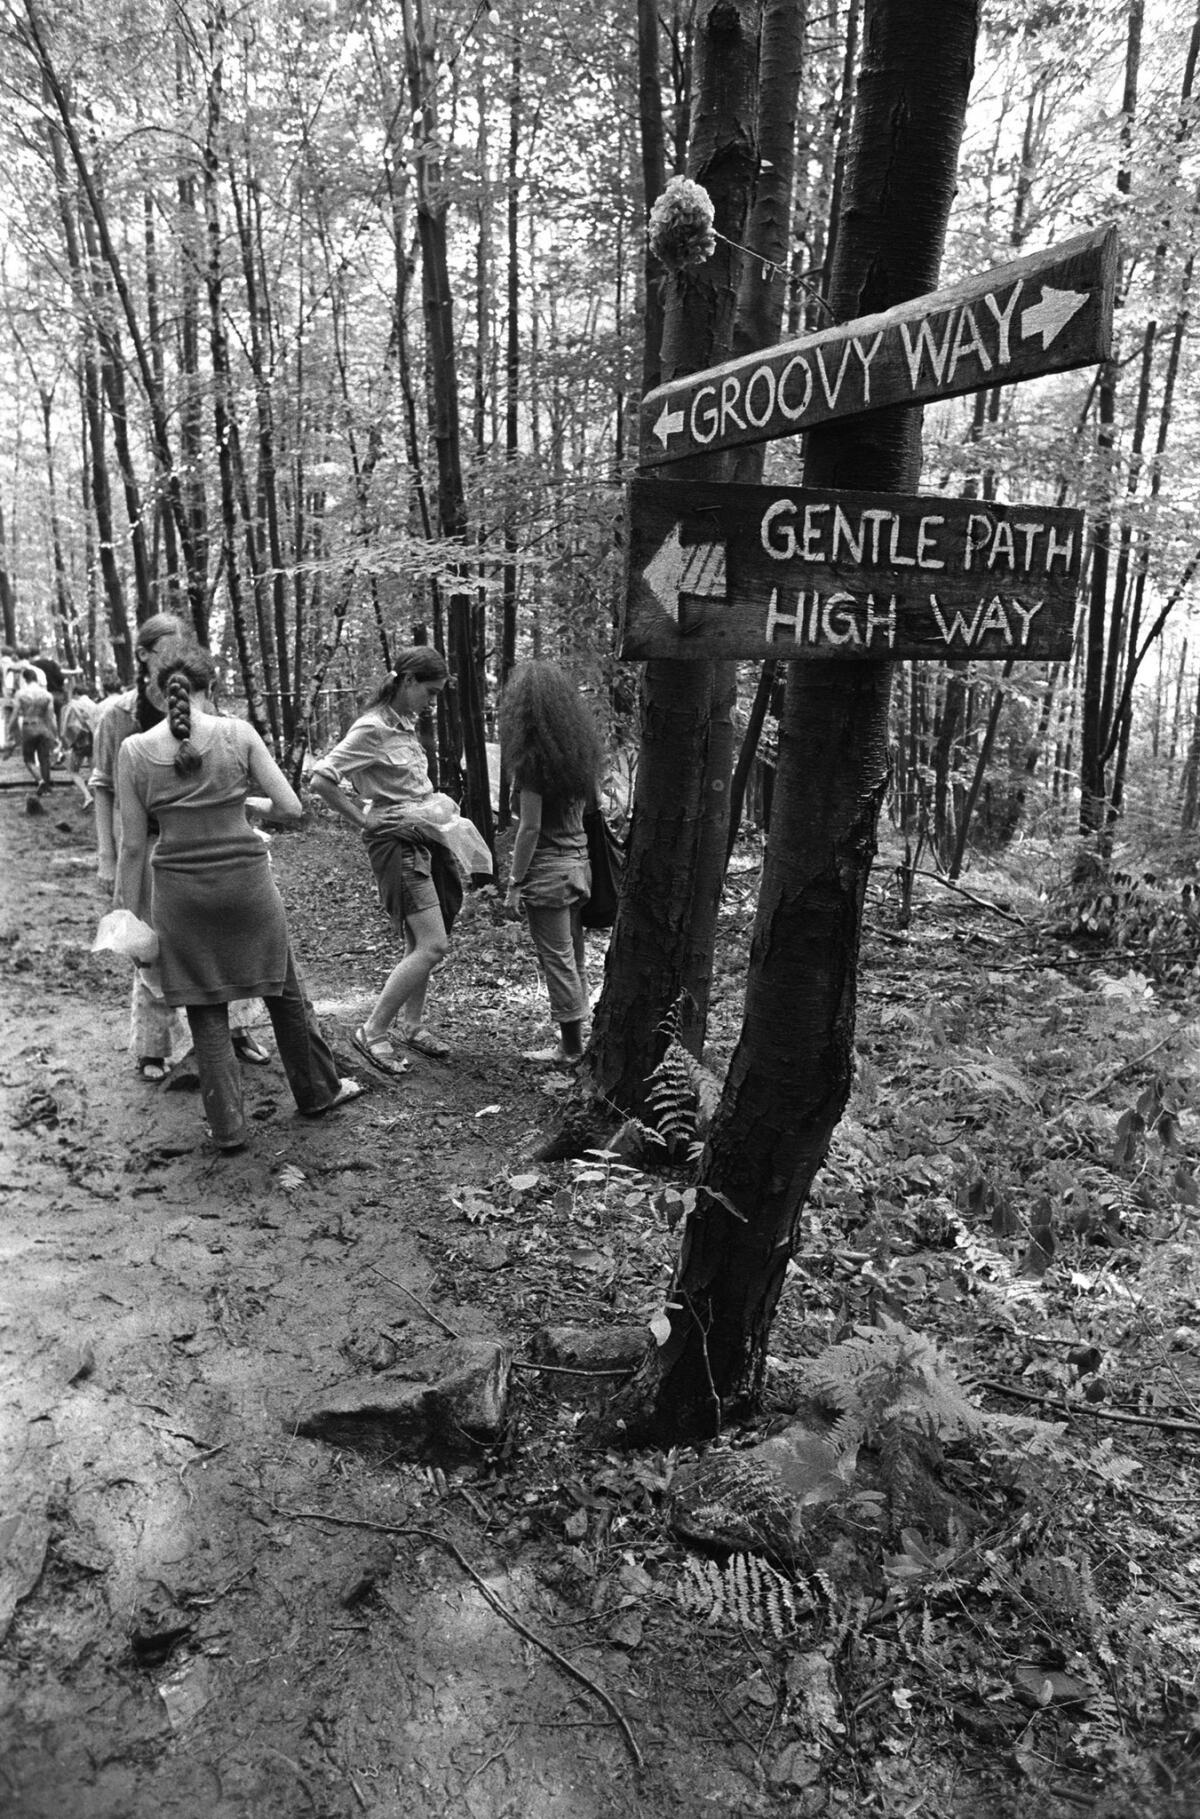 Woodstock festival in Bethel, N.Y., 1969 (Baron Wolman / Iconic Images)